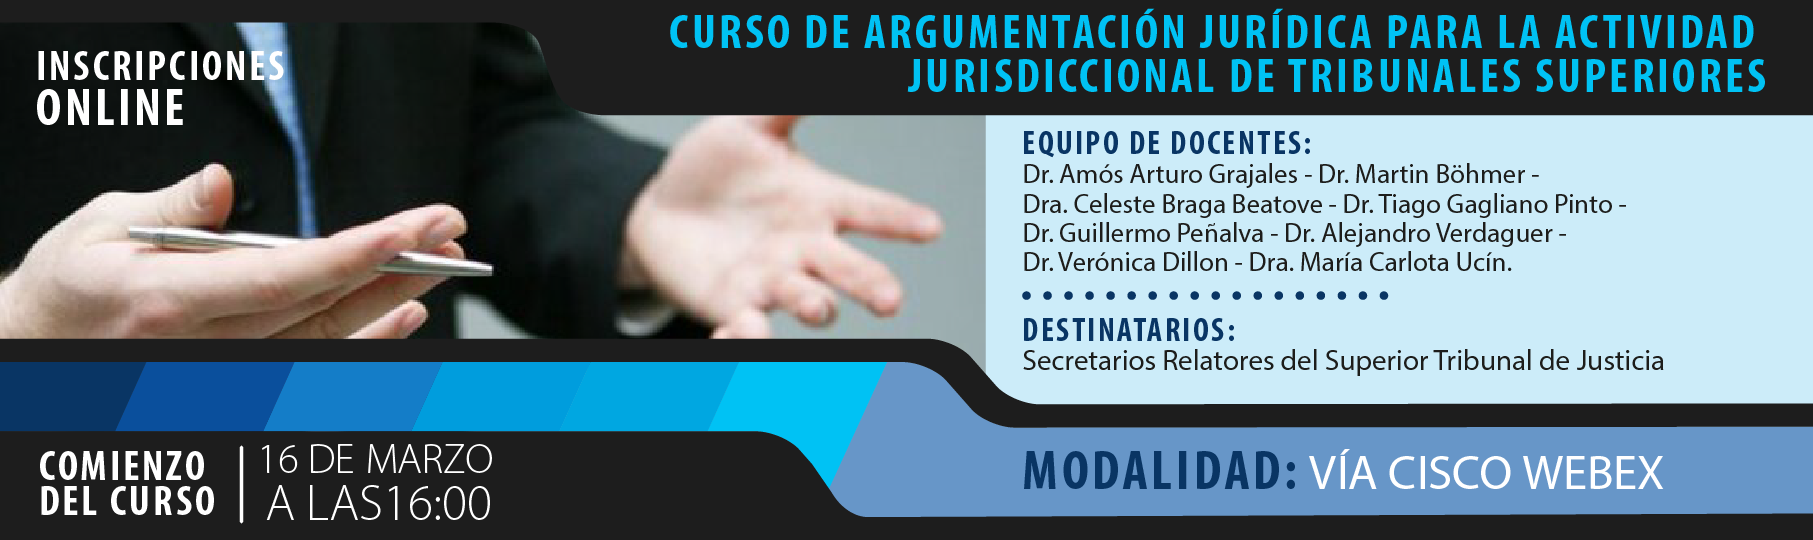 Curso_de_Argumentacin_Jurdica-01